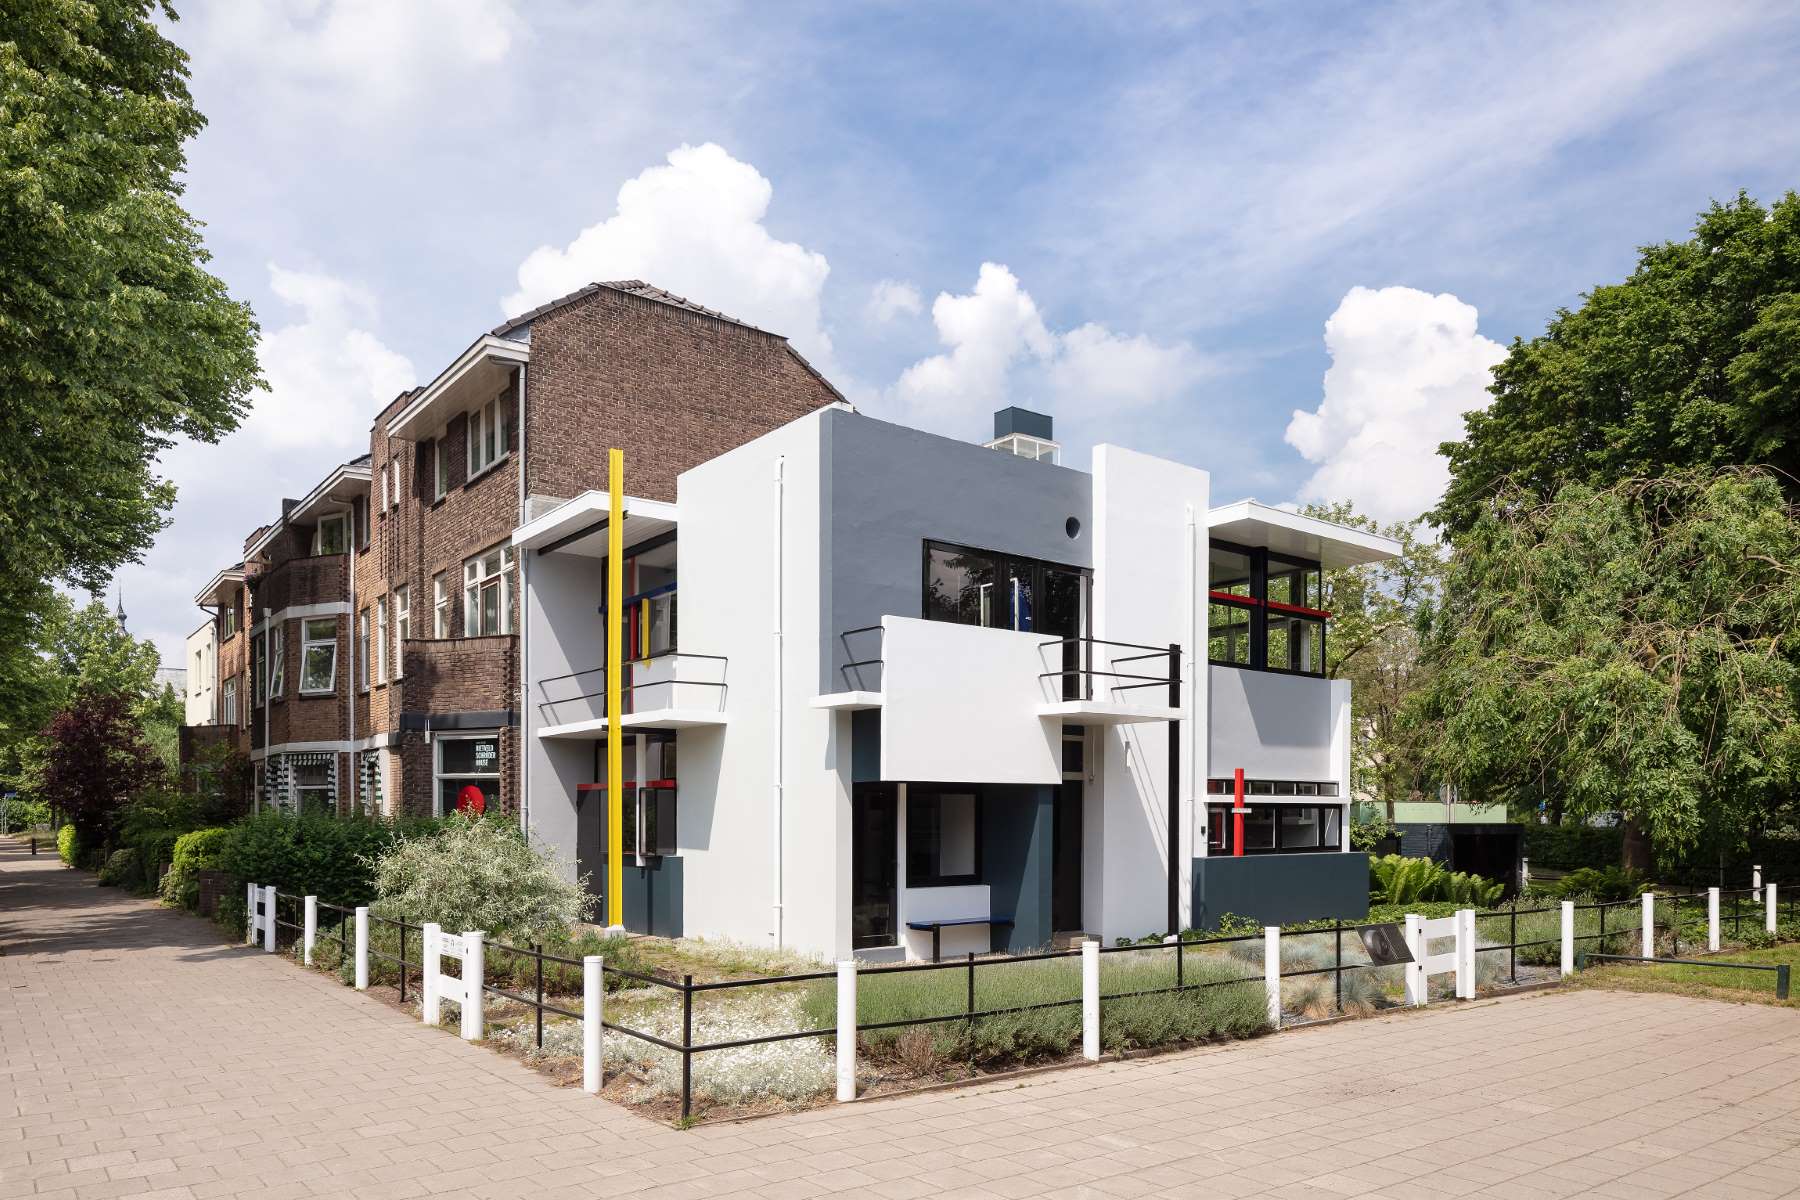 What House Did Gerrit Rietveld Design